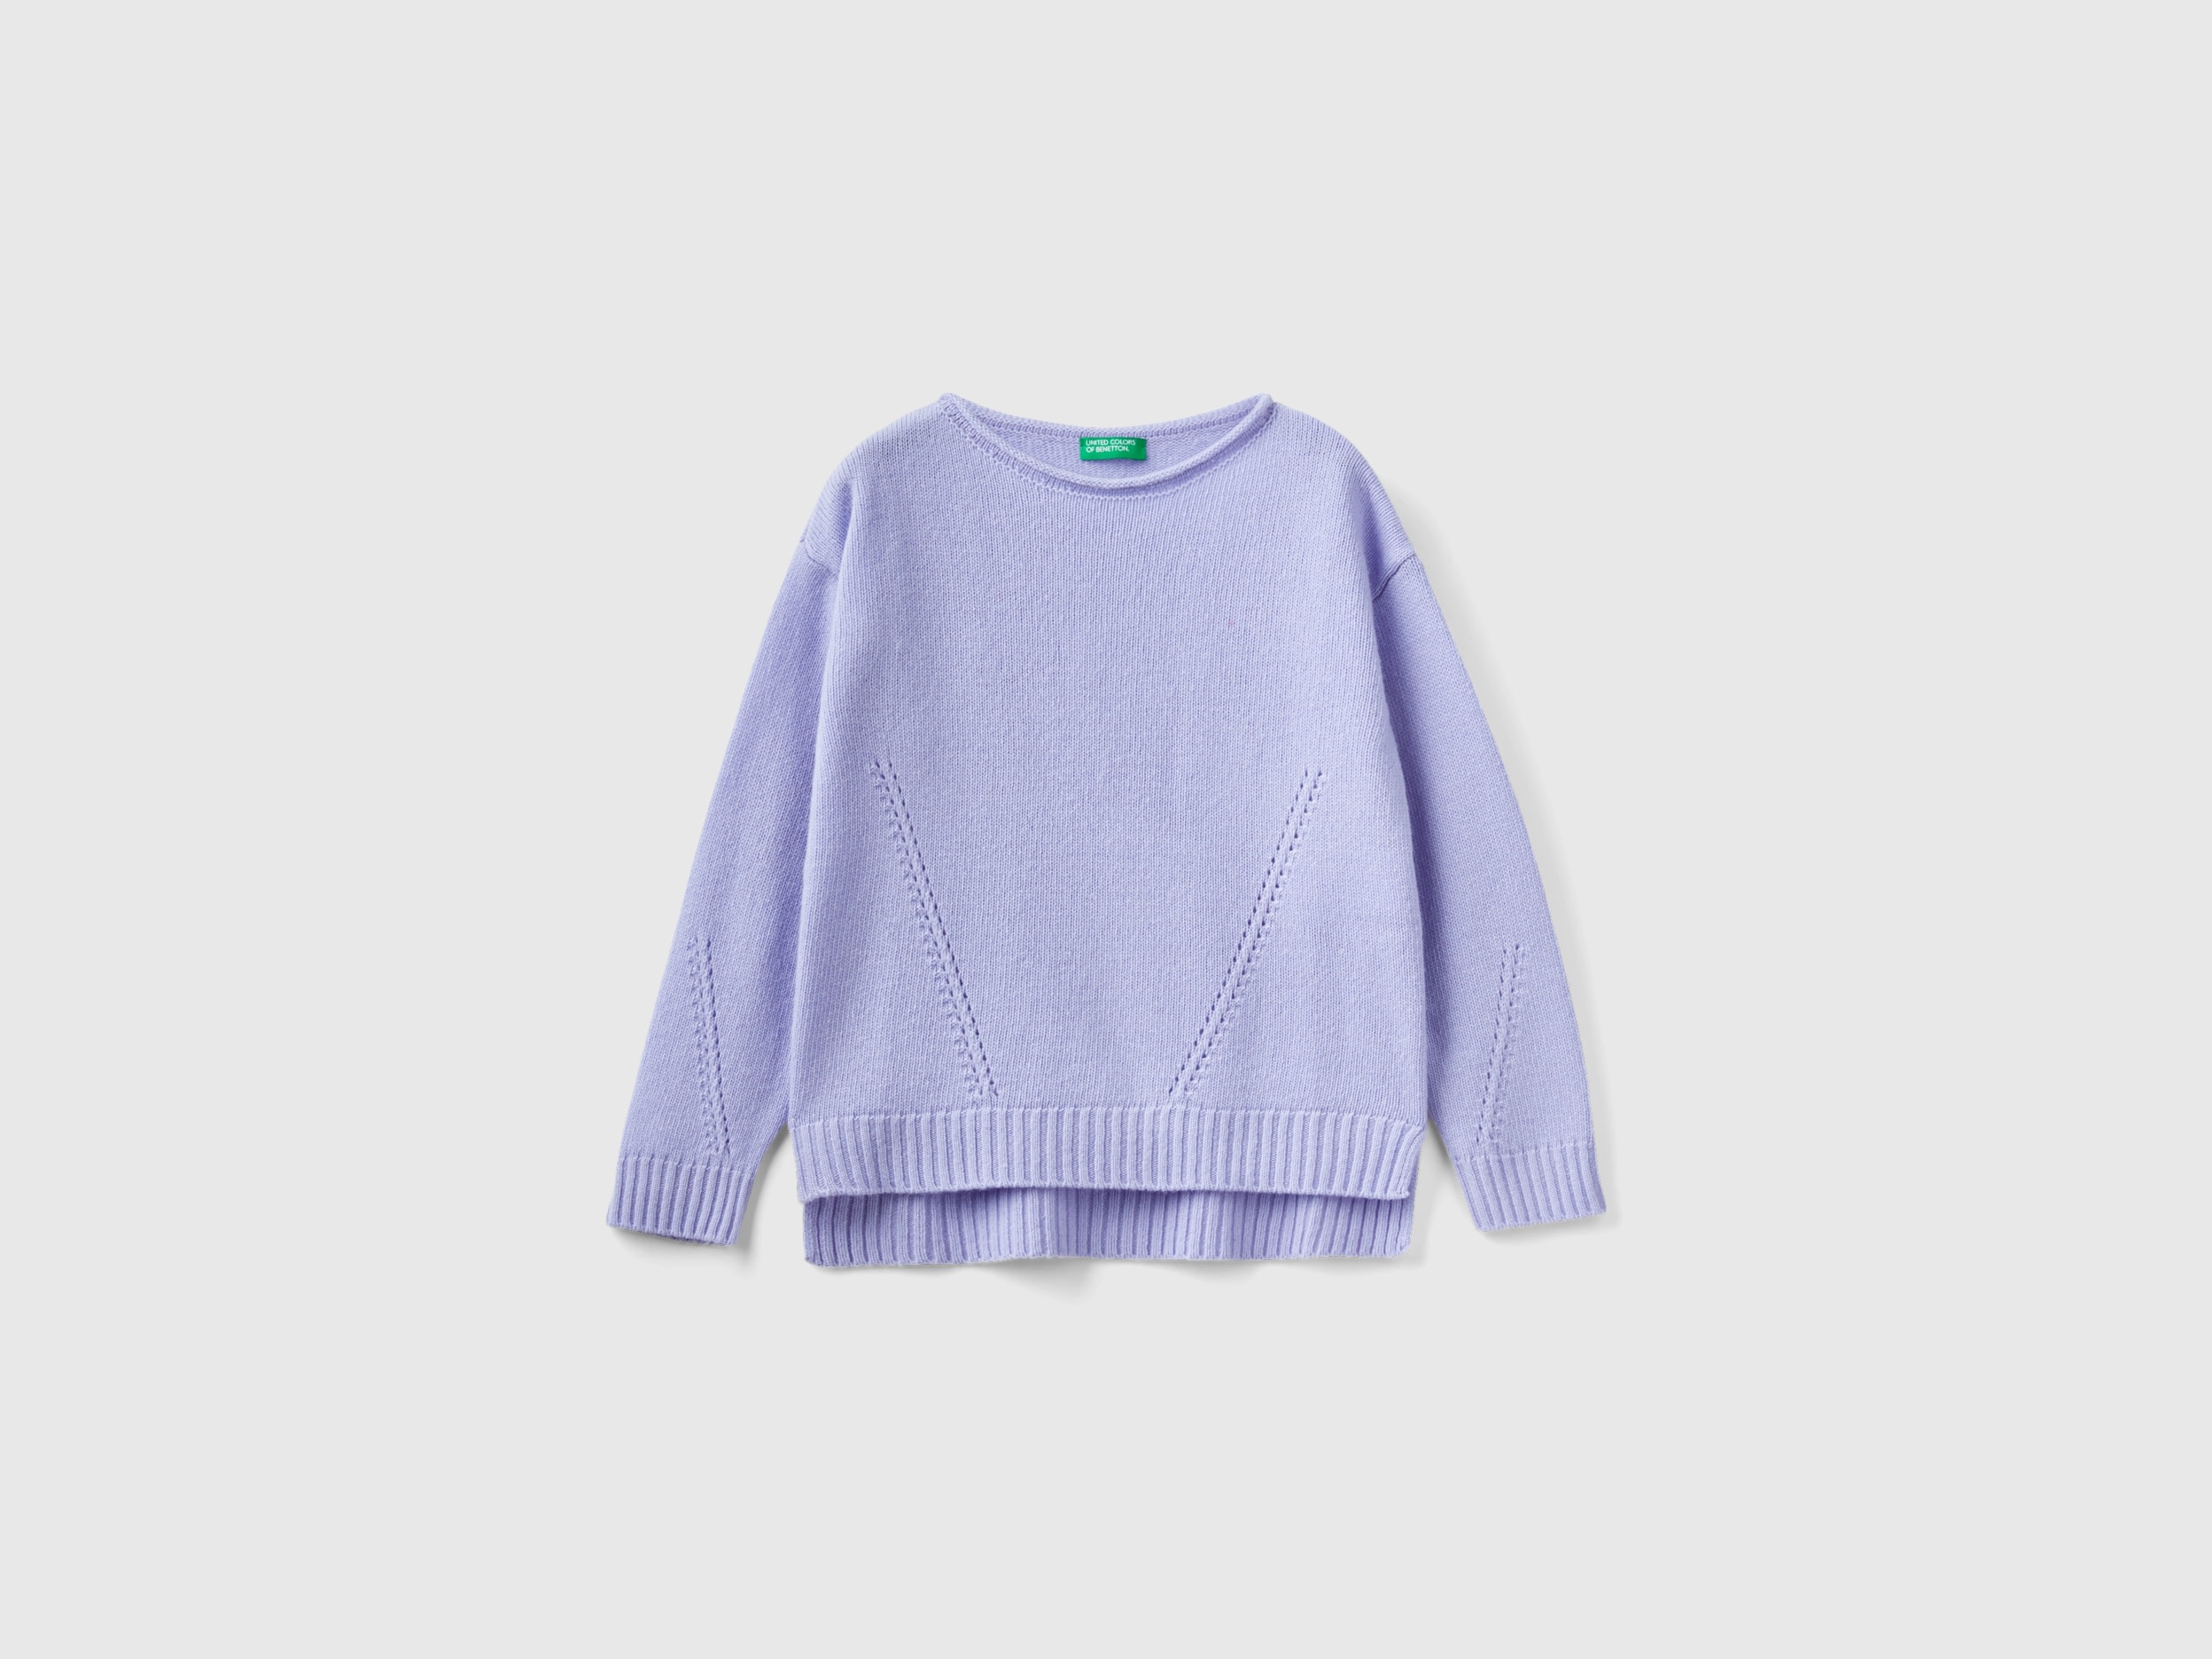 Benetton, Knit Sweater With Playful Stitching, size M, Lilac, Kids